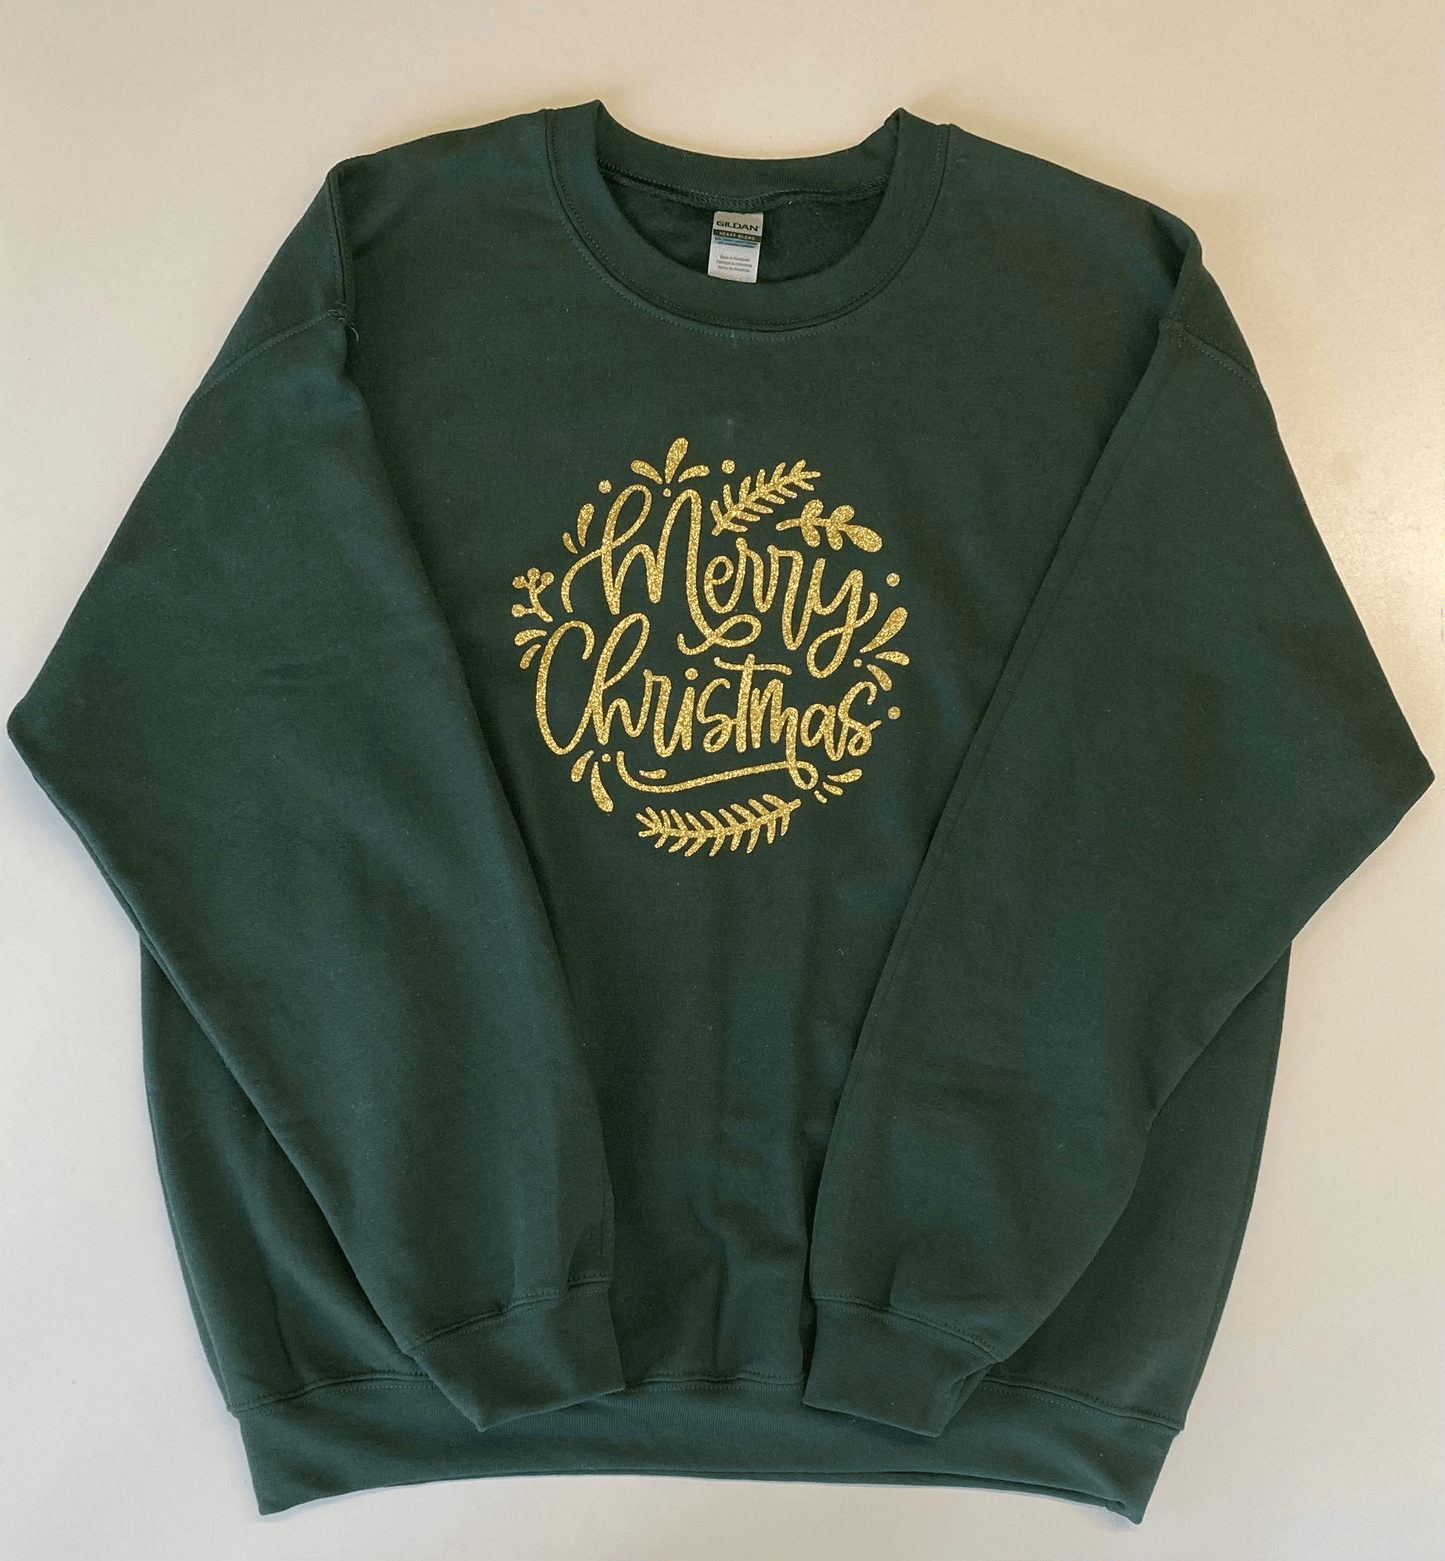 Merry Christmas Crewneck Sweatshirt for Holidays. Graphic Sweatshirts for Family.